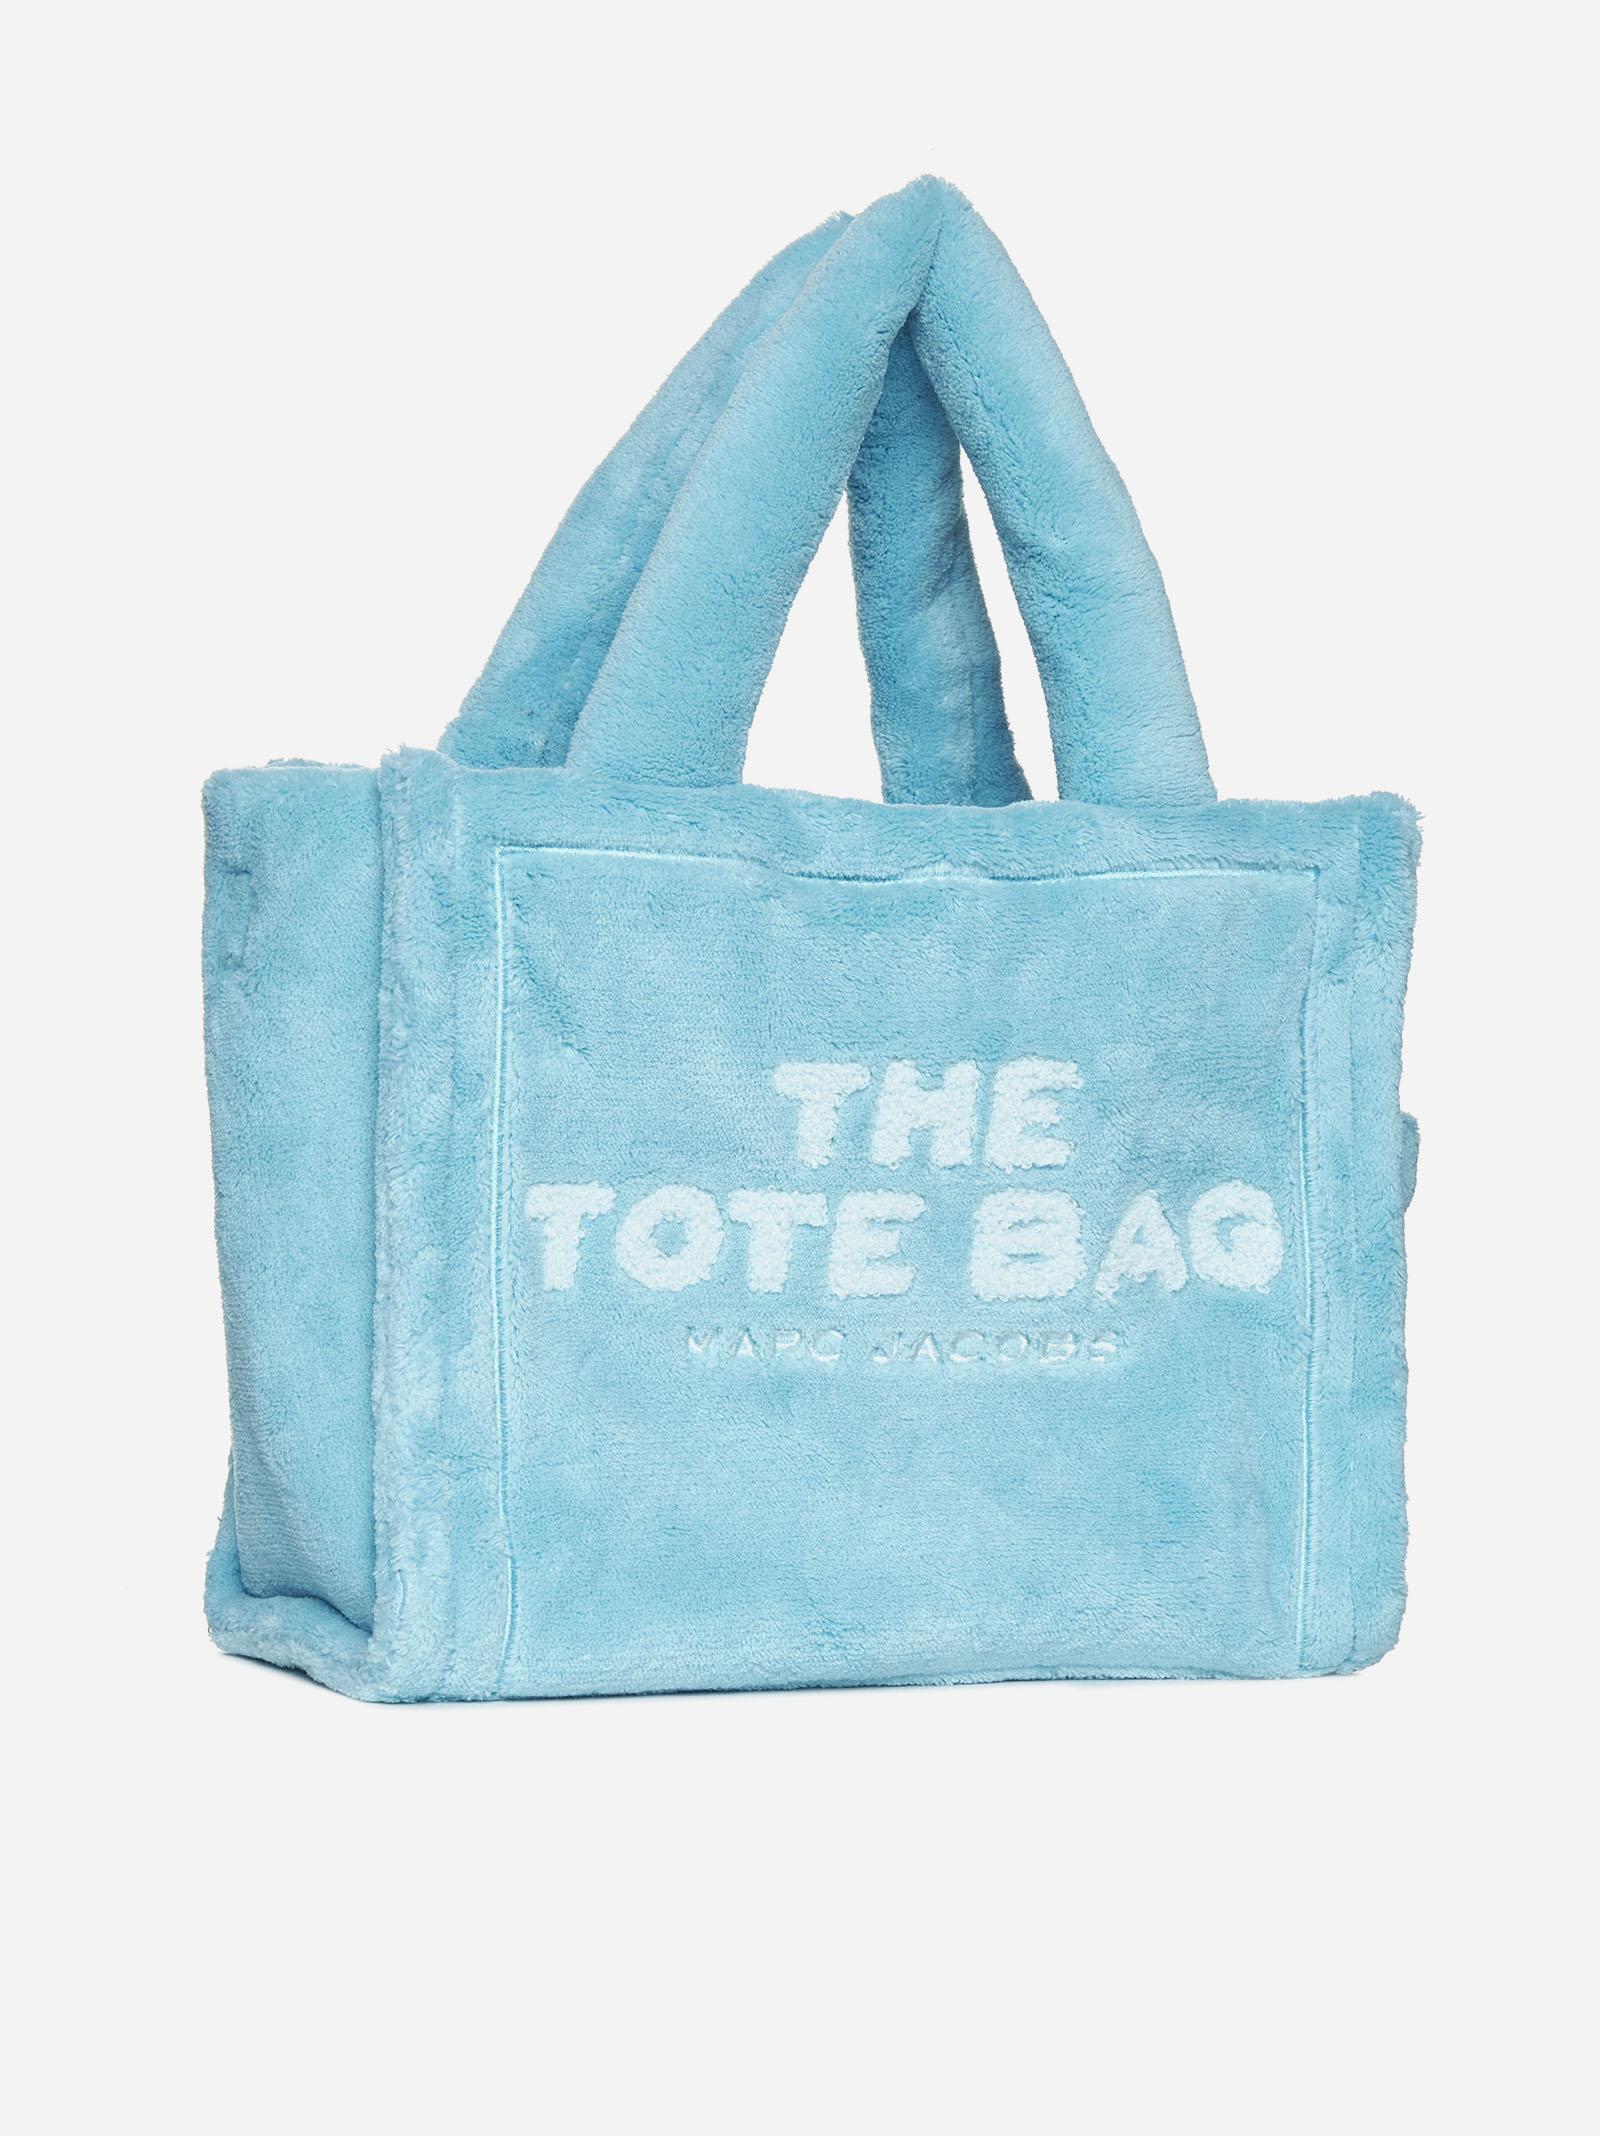 Pool Tote Bag - Turquoise